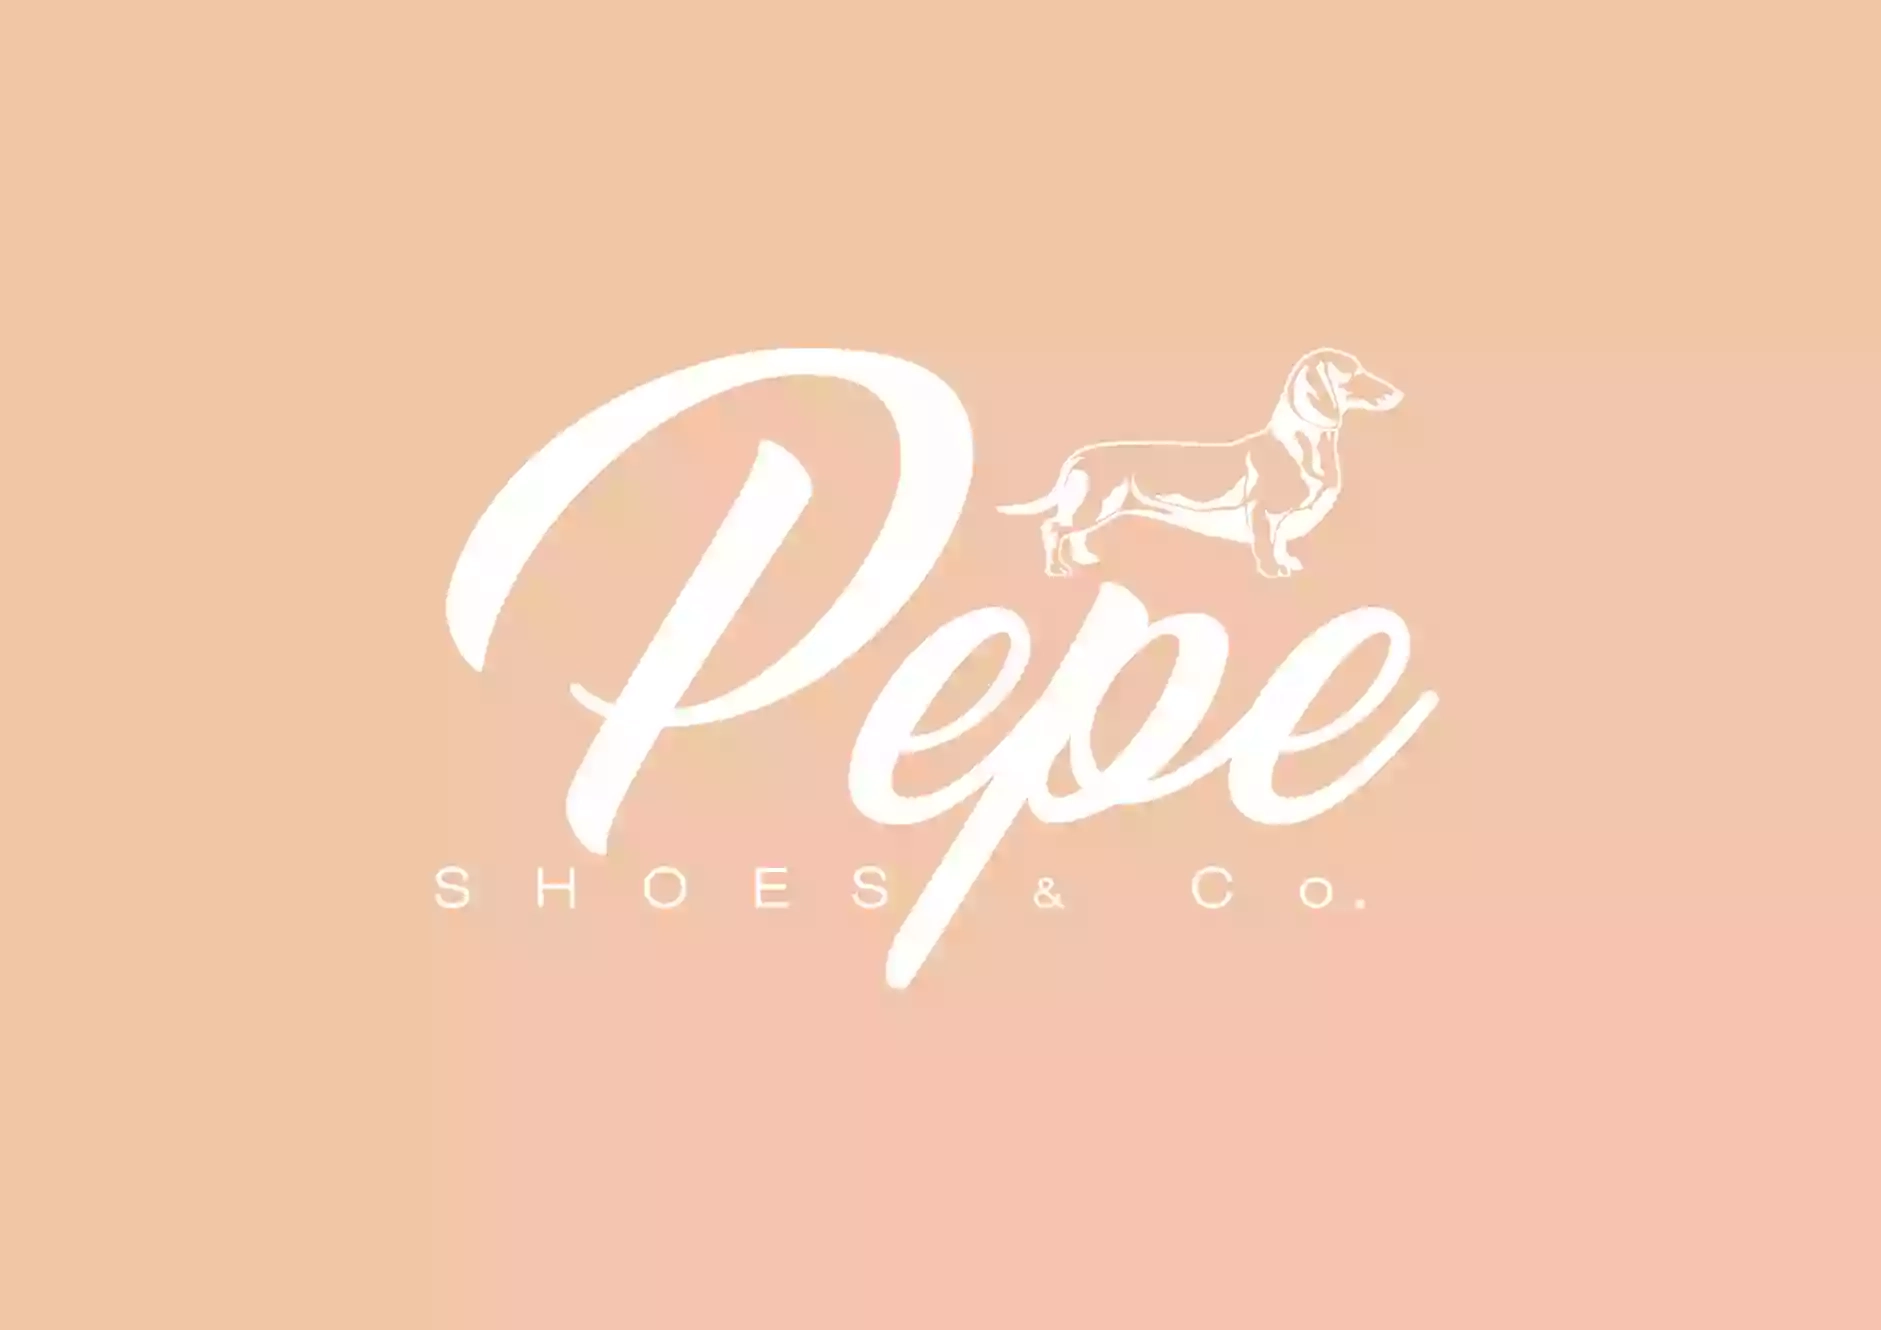 Pepe Shoes & Co